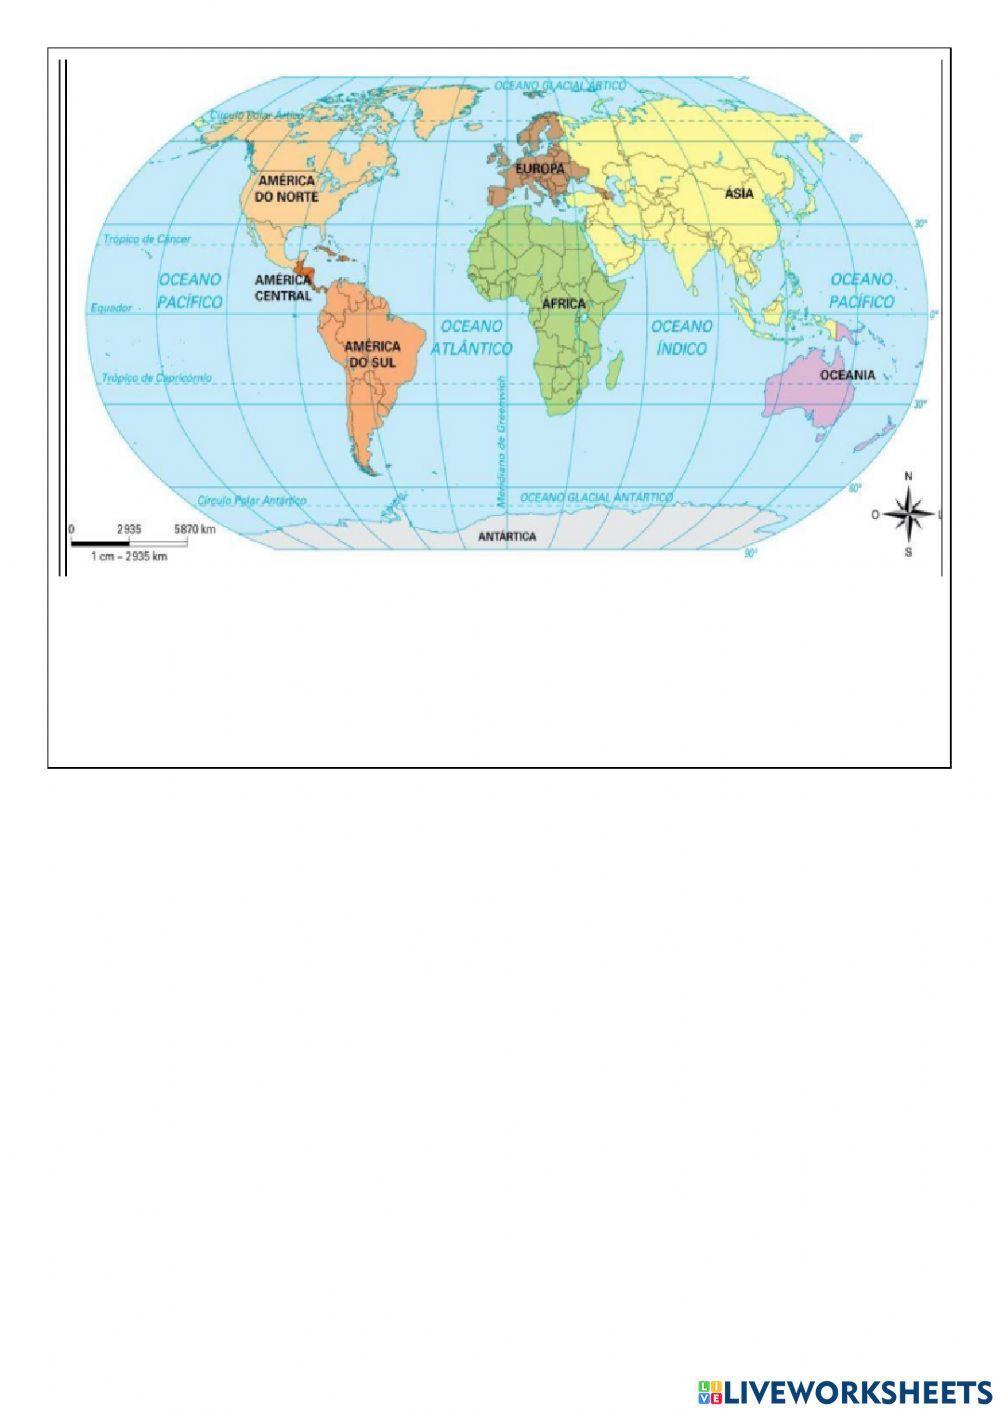 Geografia - Cartografia